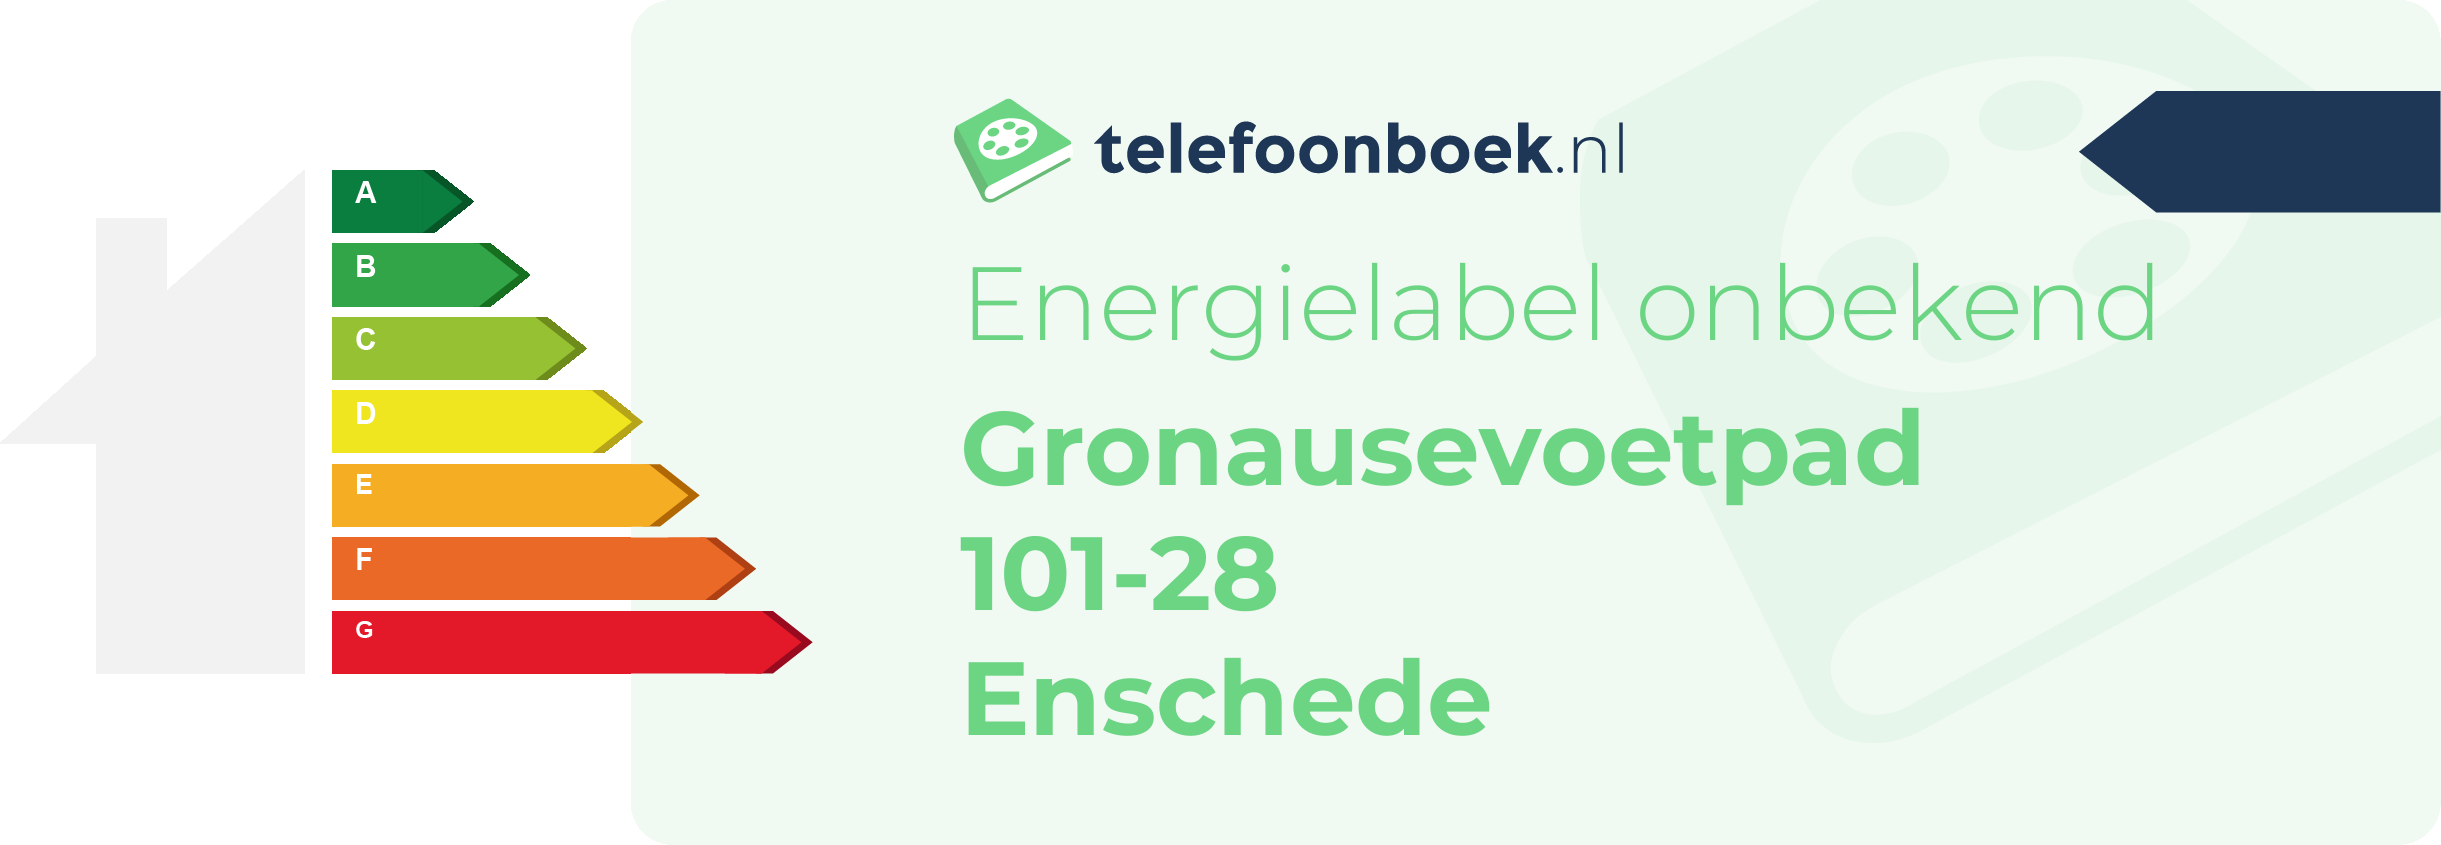 Energielabel Gronausevoetpad 101-28 Enschede